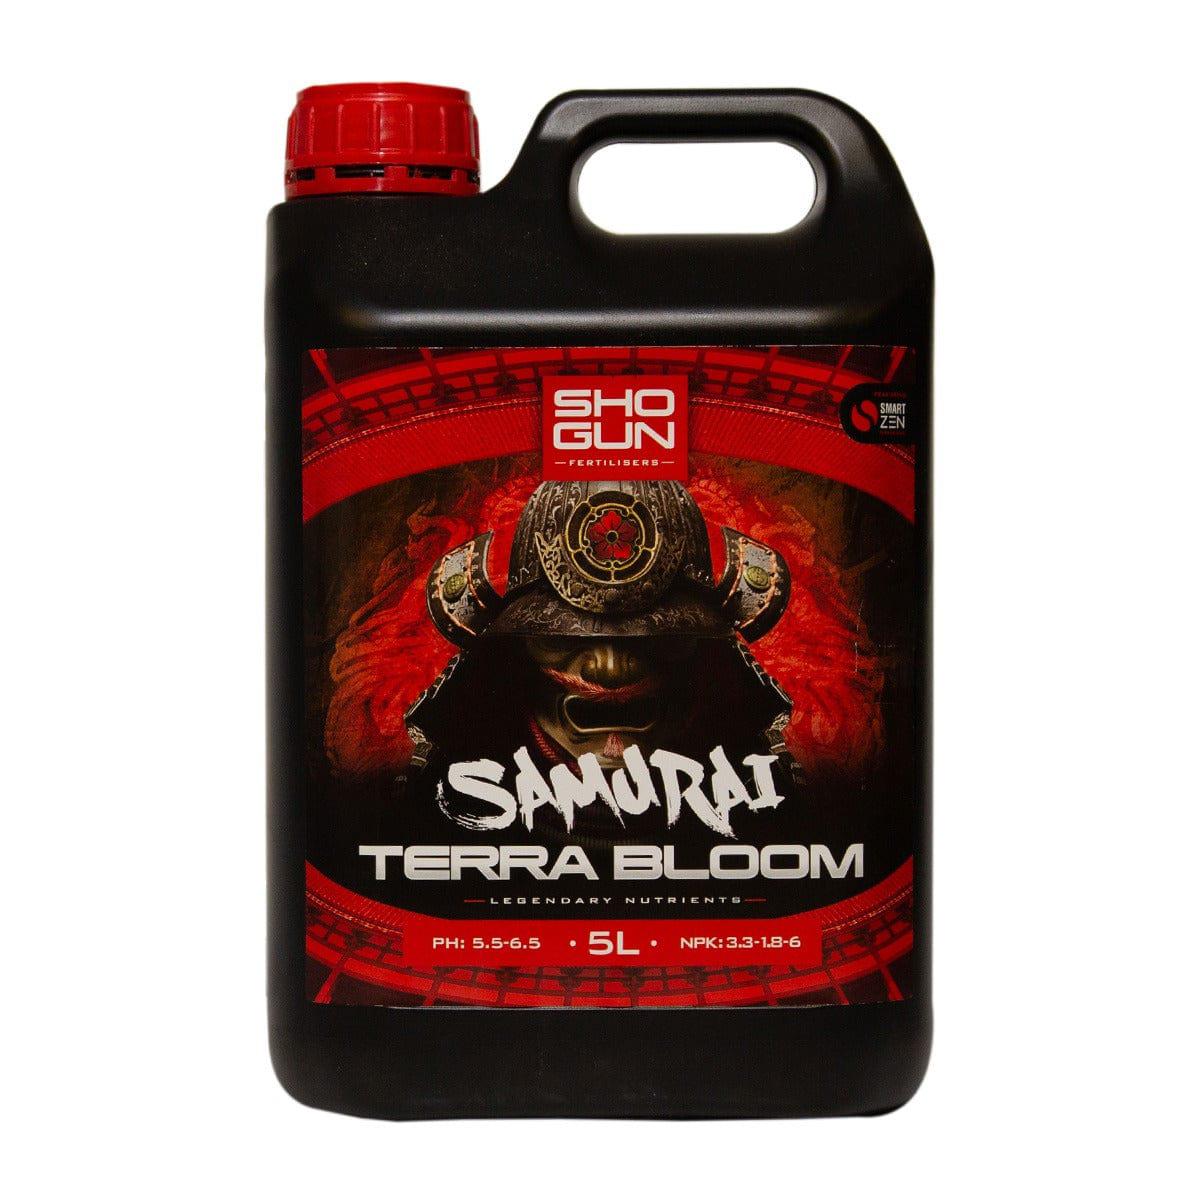 Nutrients 5L Shogun - Samurai Terra Bloom